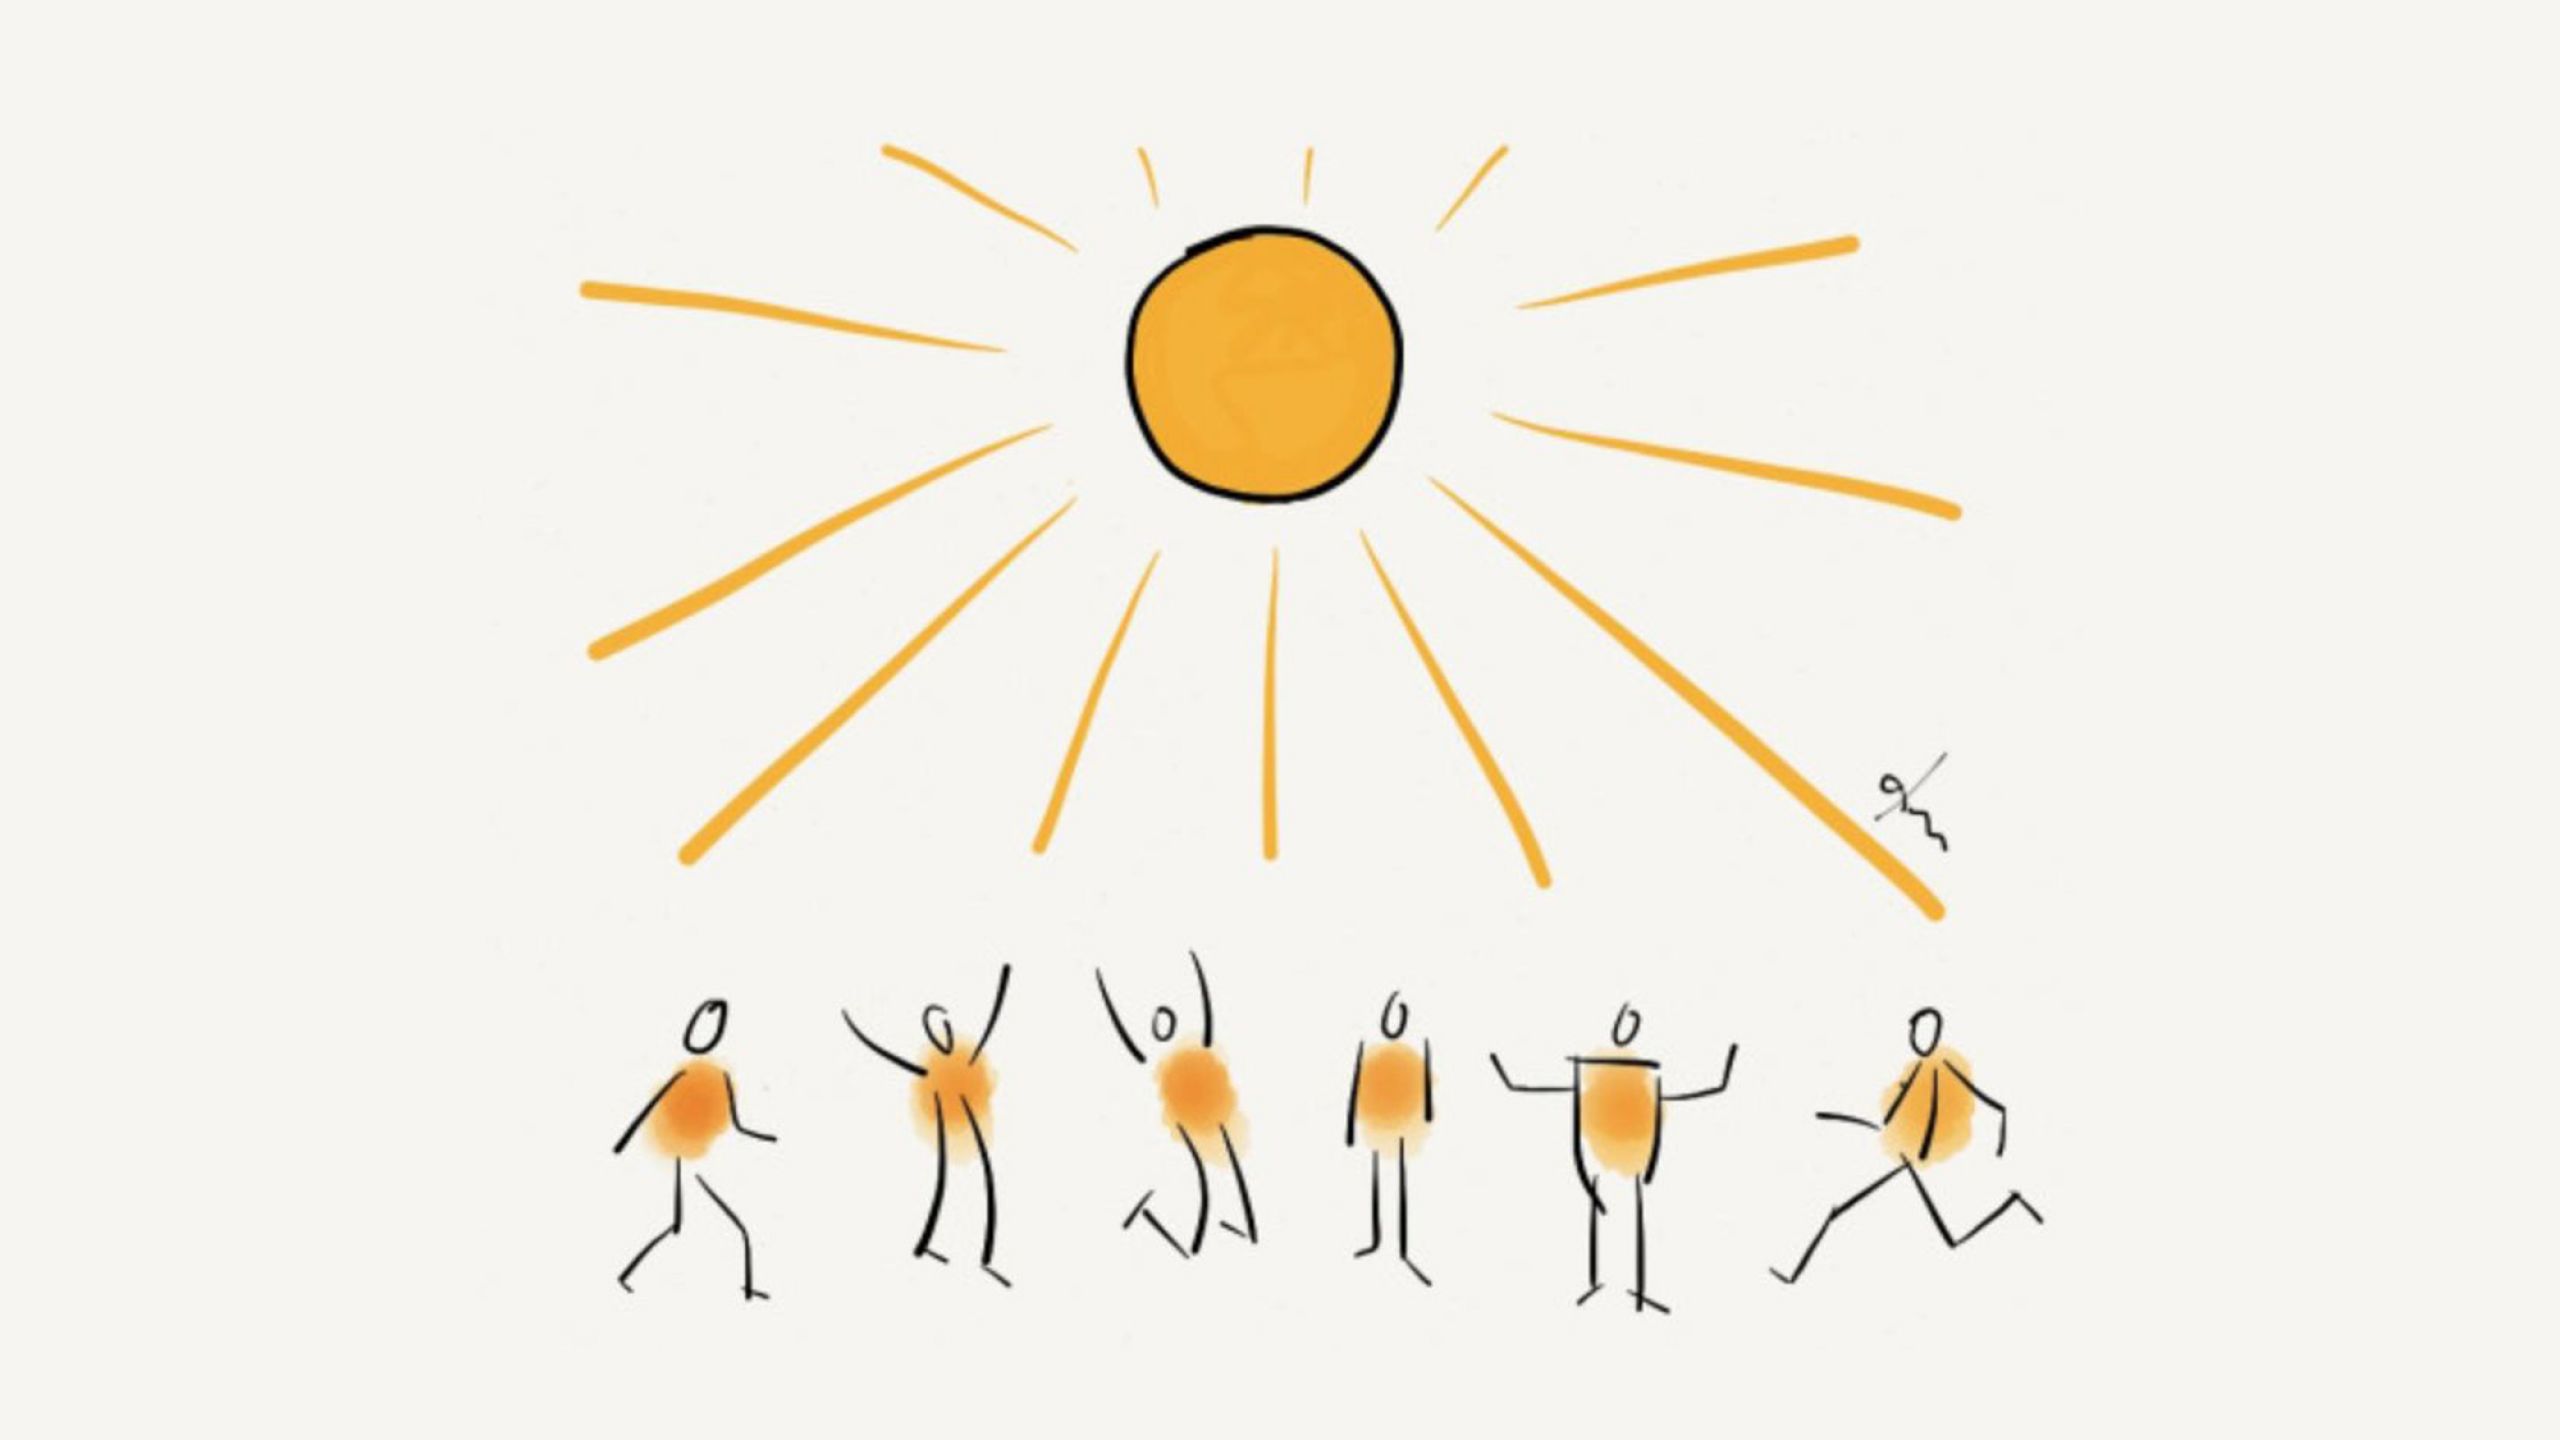 The Sunshine Sangha illustration by Doug McGill